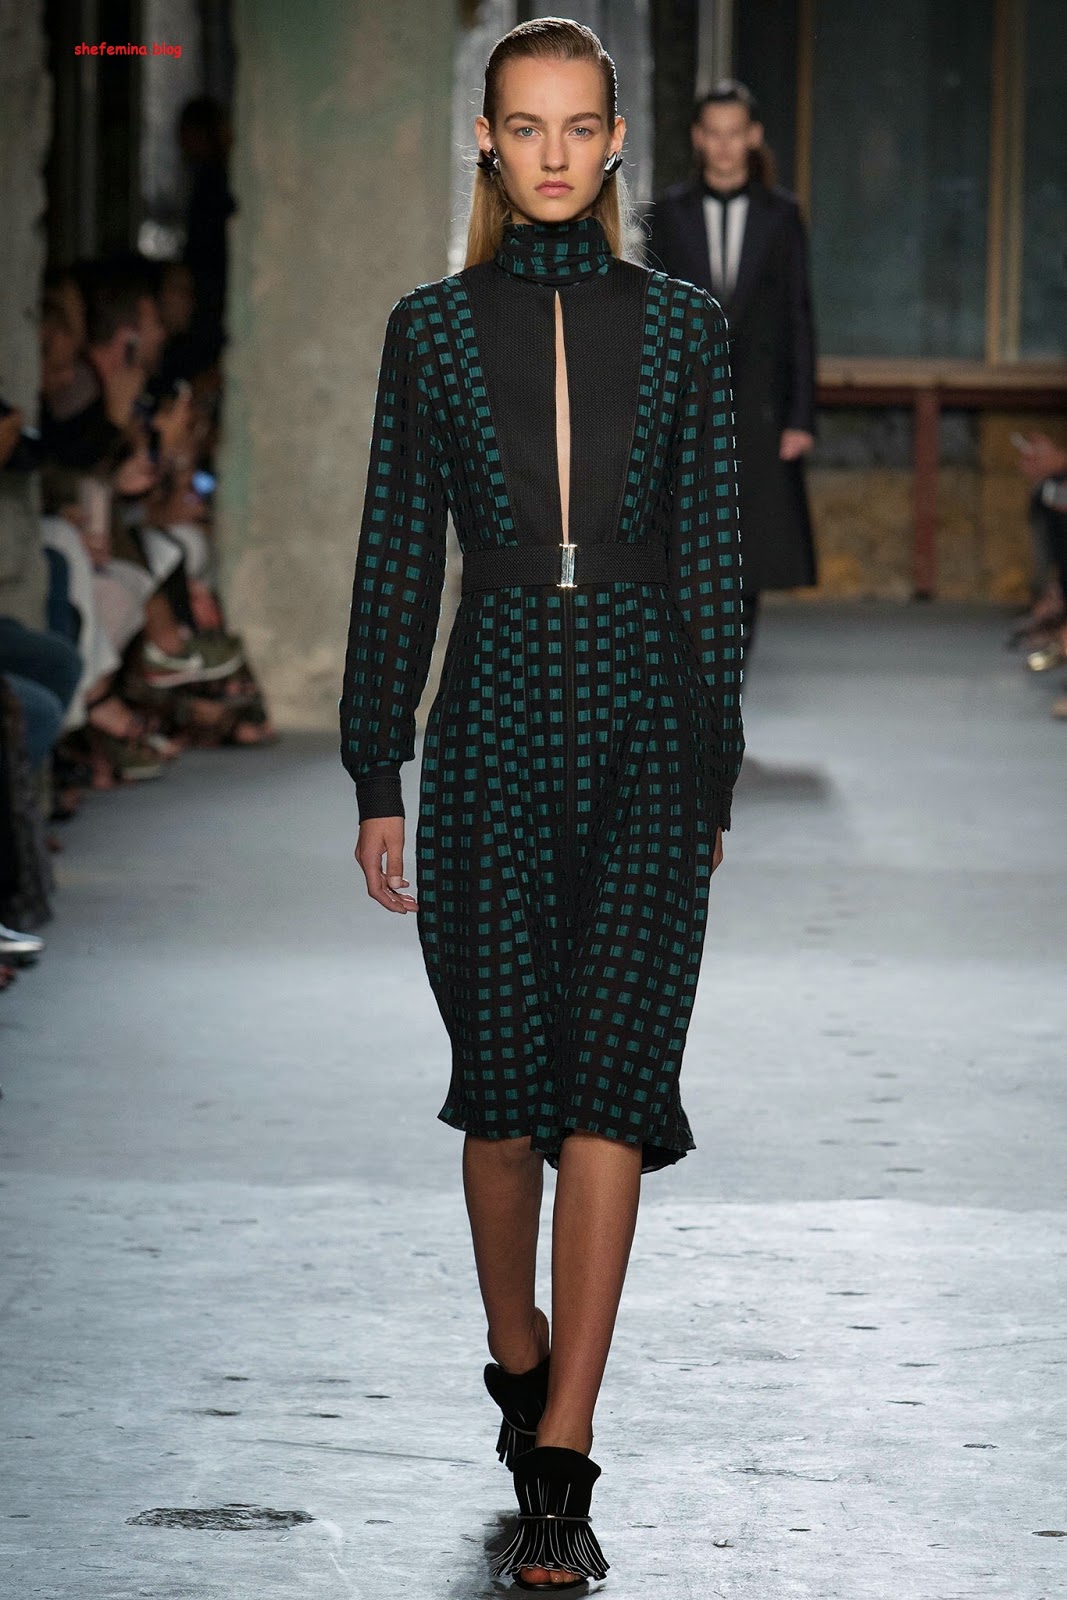 Trussardi Spring Summer 2015 Collection Milan fashion week | Fashion is ...